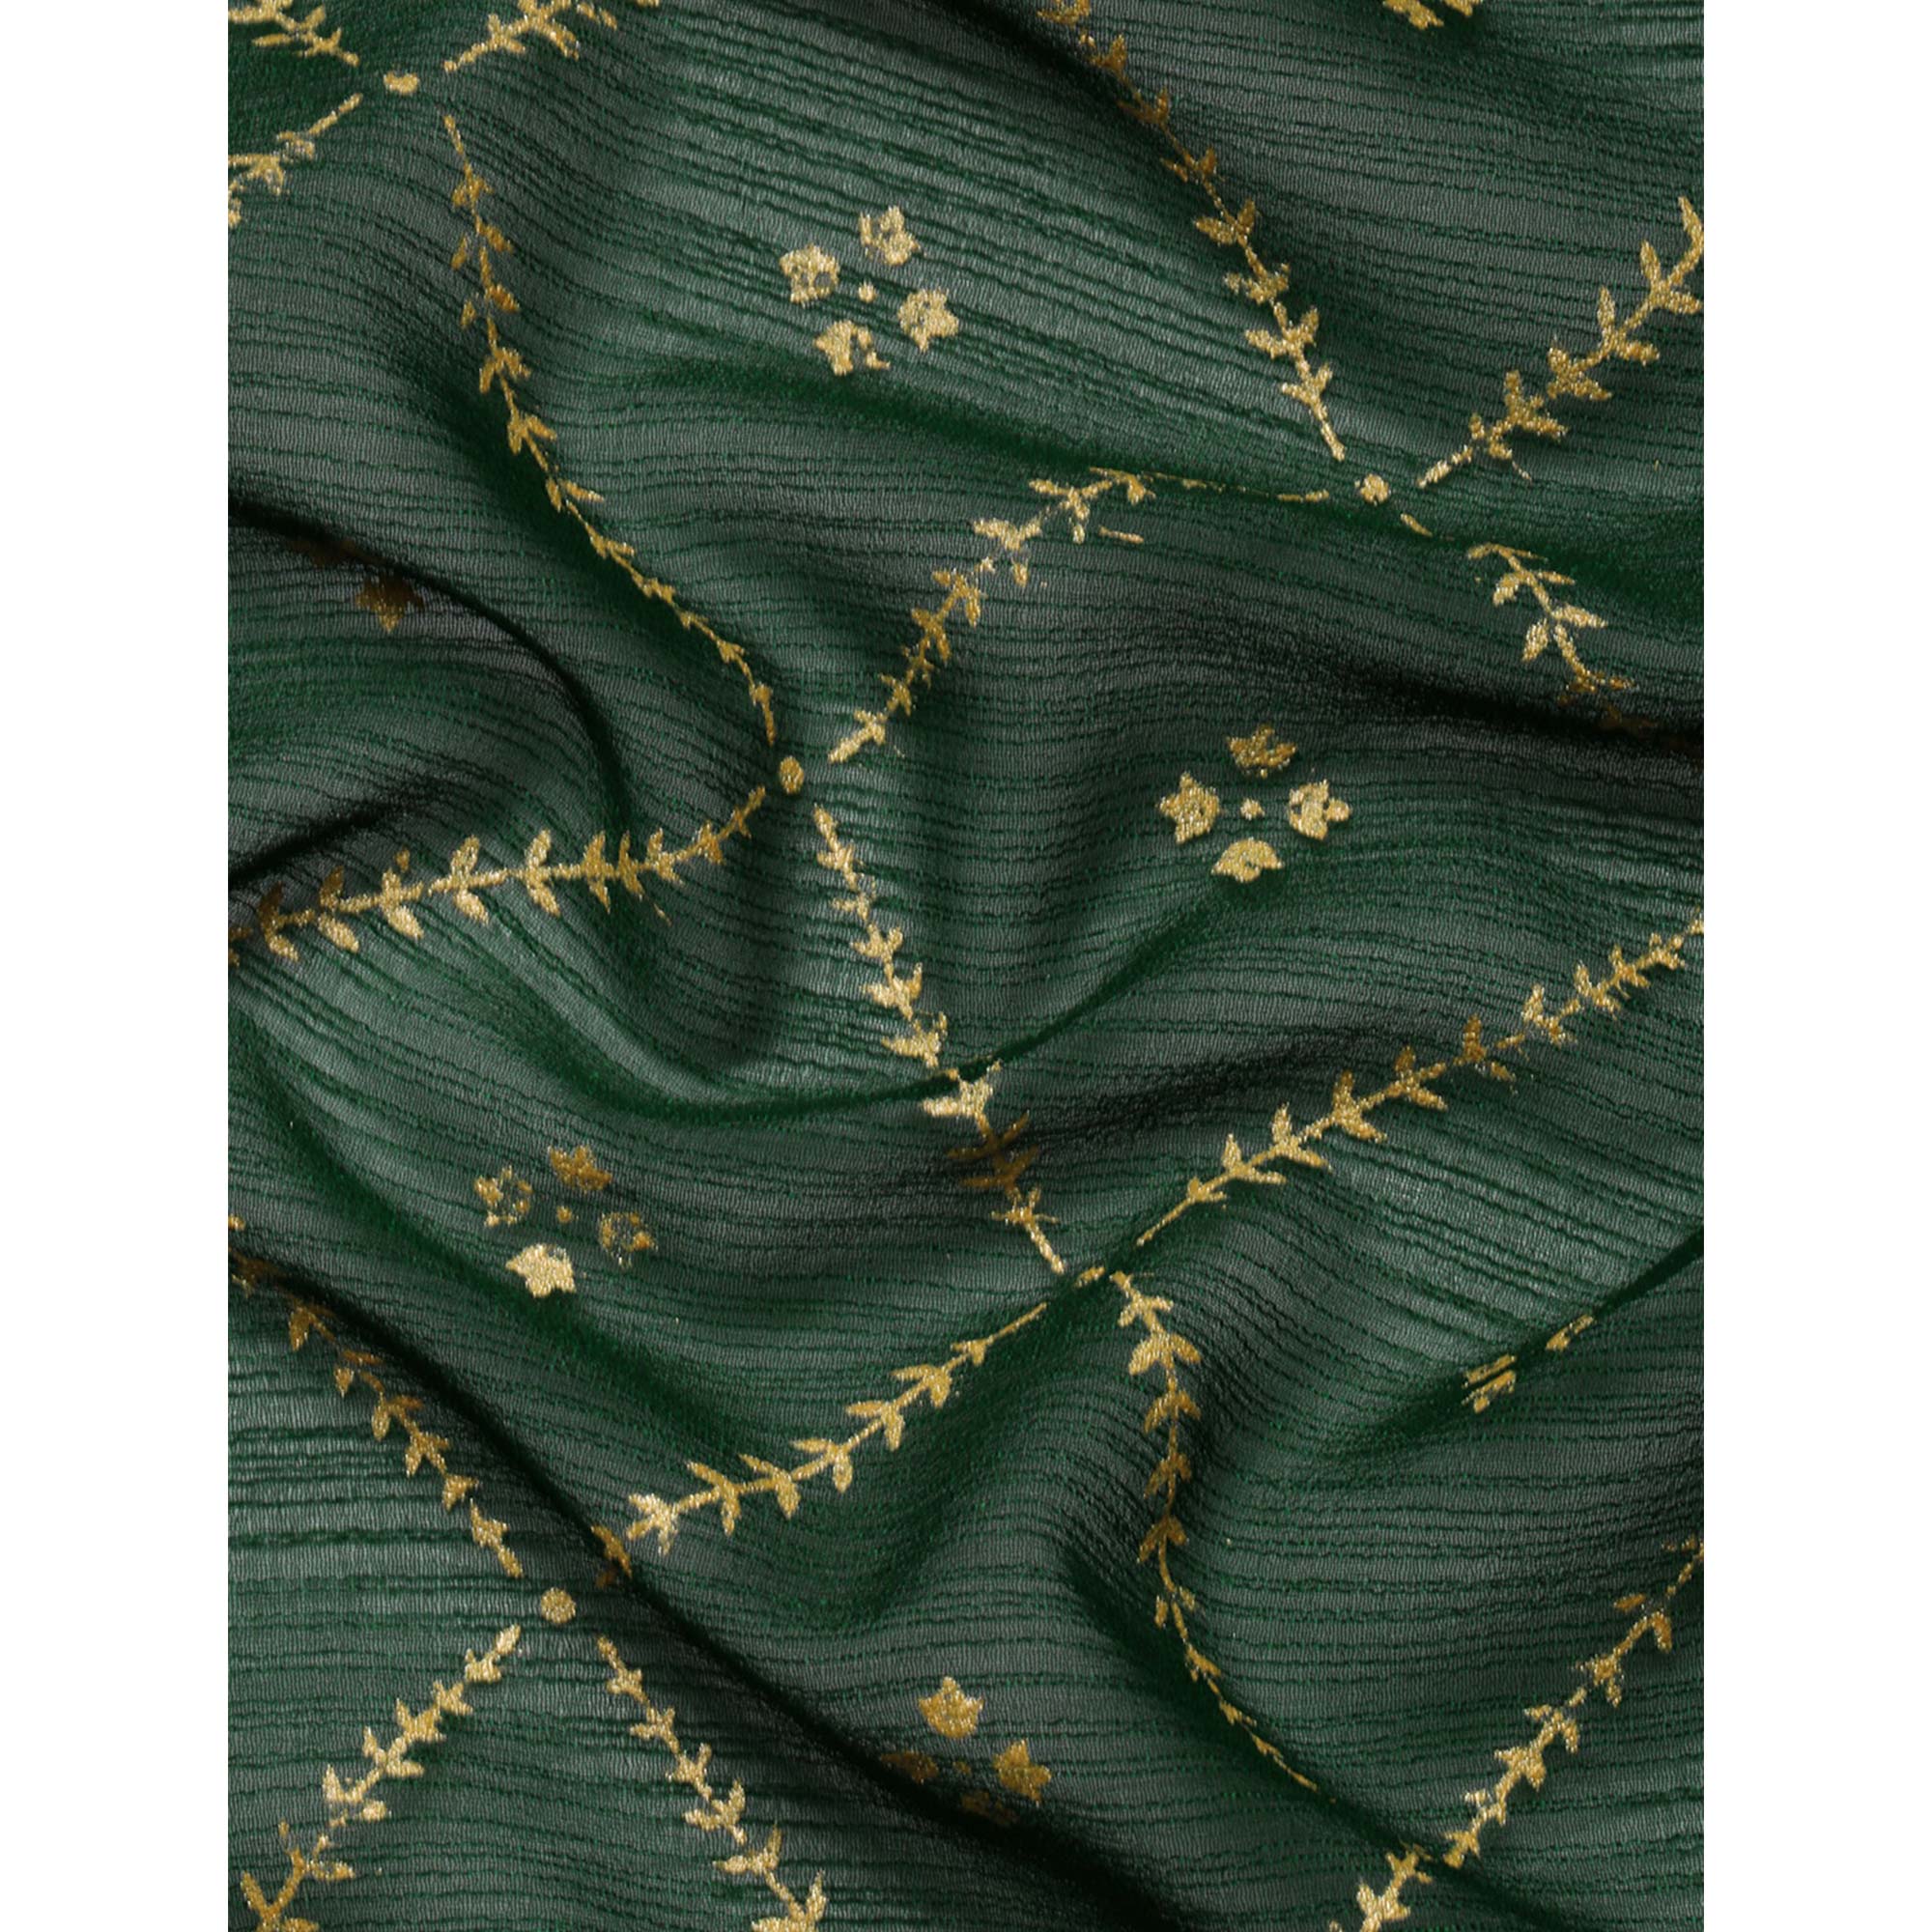 Green Floral Foil Printed Zomato Saree